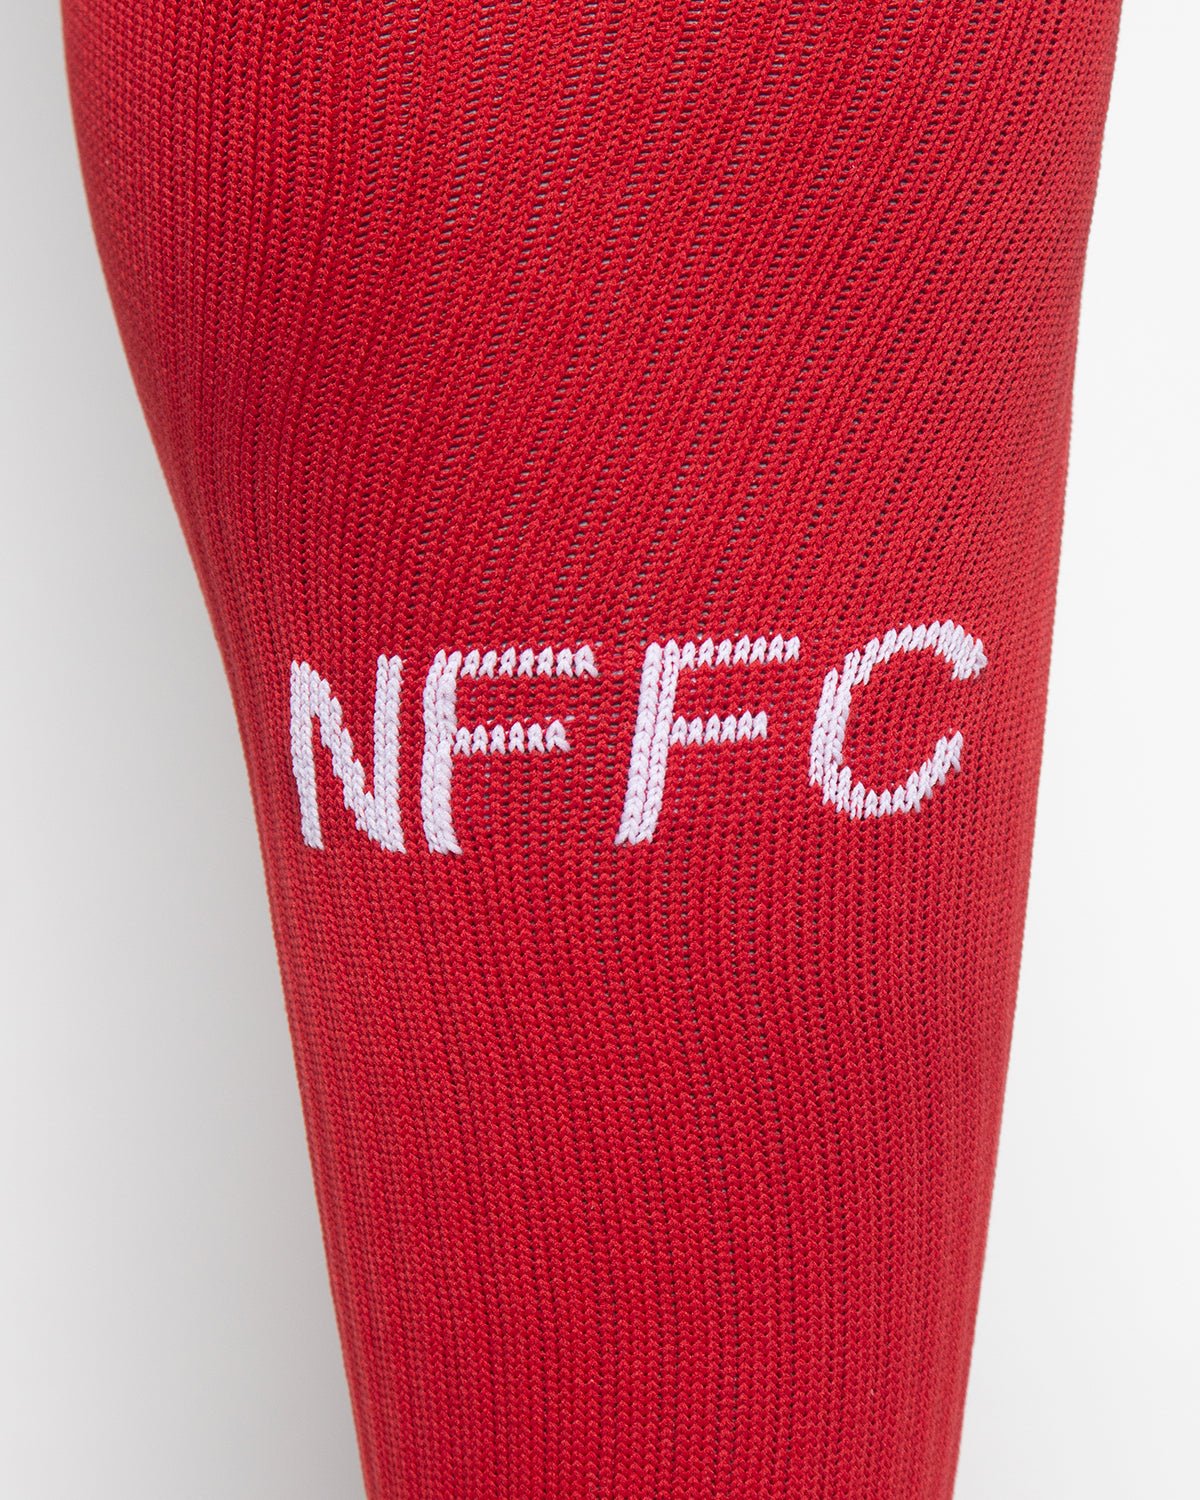 NFFC Home Socks 23-24 - Nottingham Forest FC